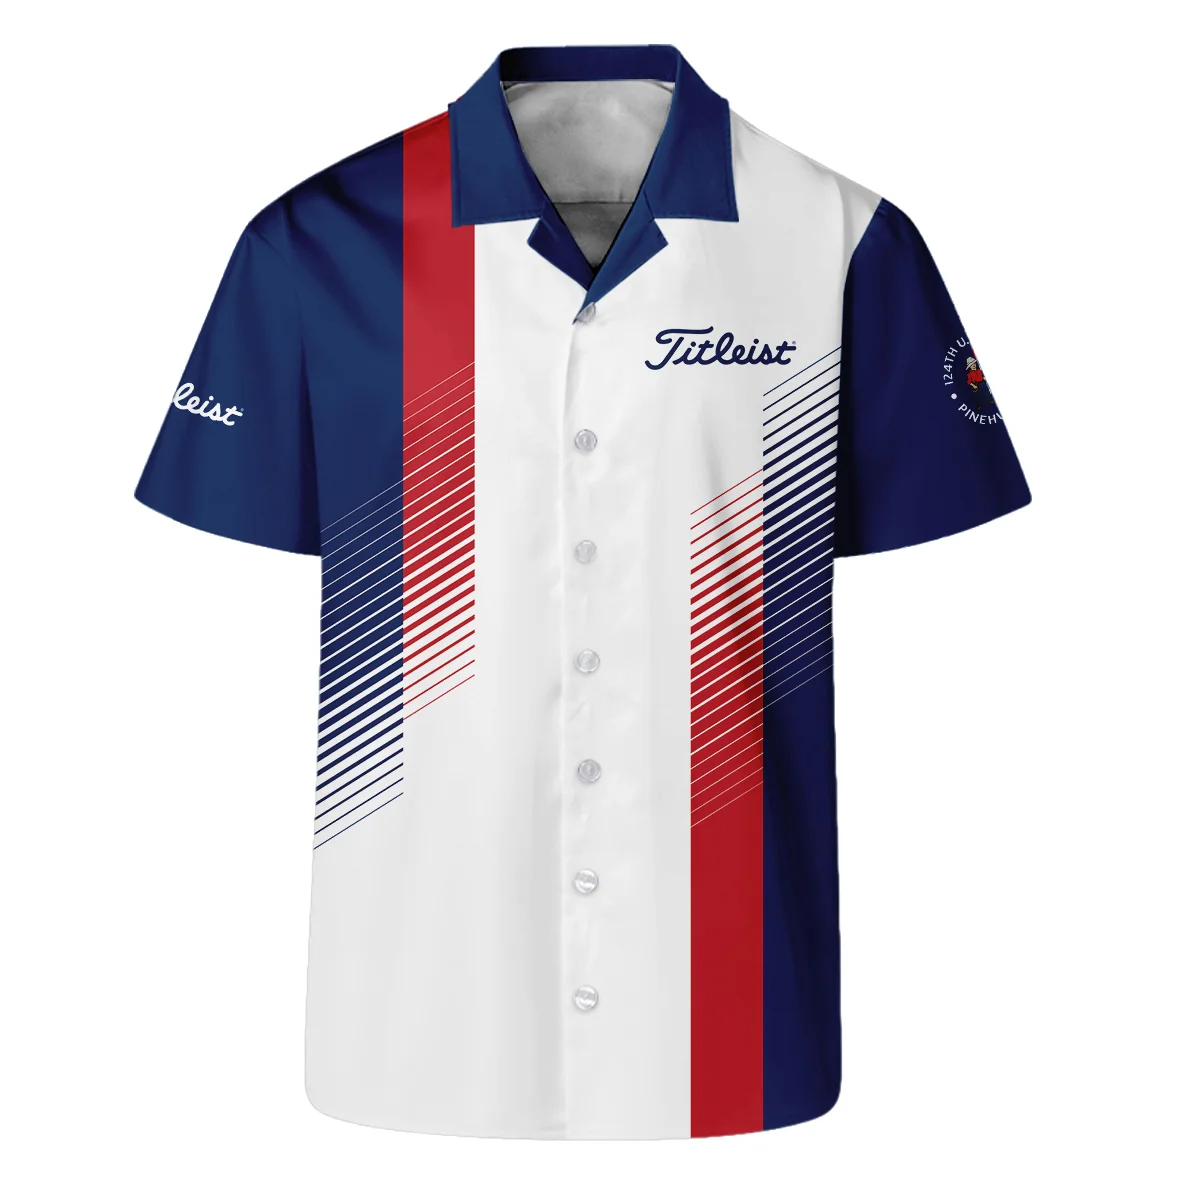 Sport Titleist 124th U.S. Open Pinehurst Golf Hoodie Shirt Blue Red Striped Pattern White All Over Print Hoodie Shirt